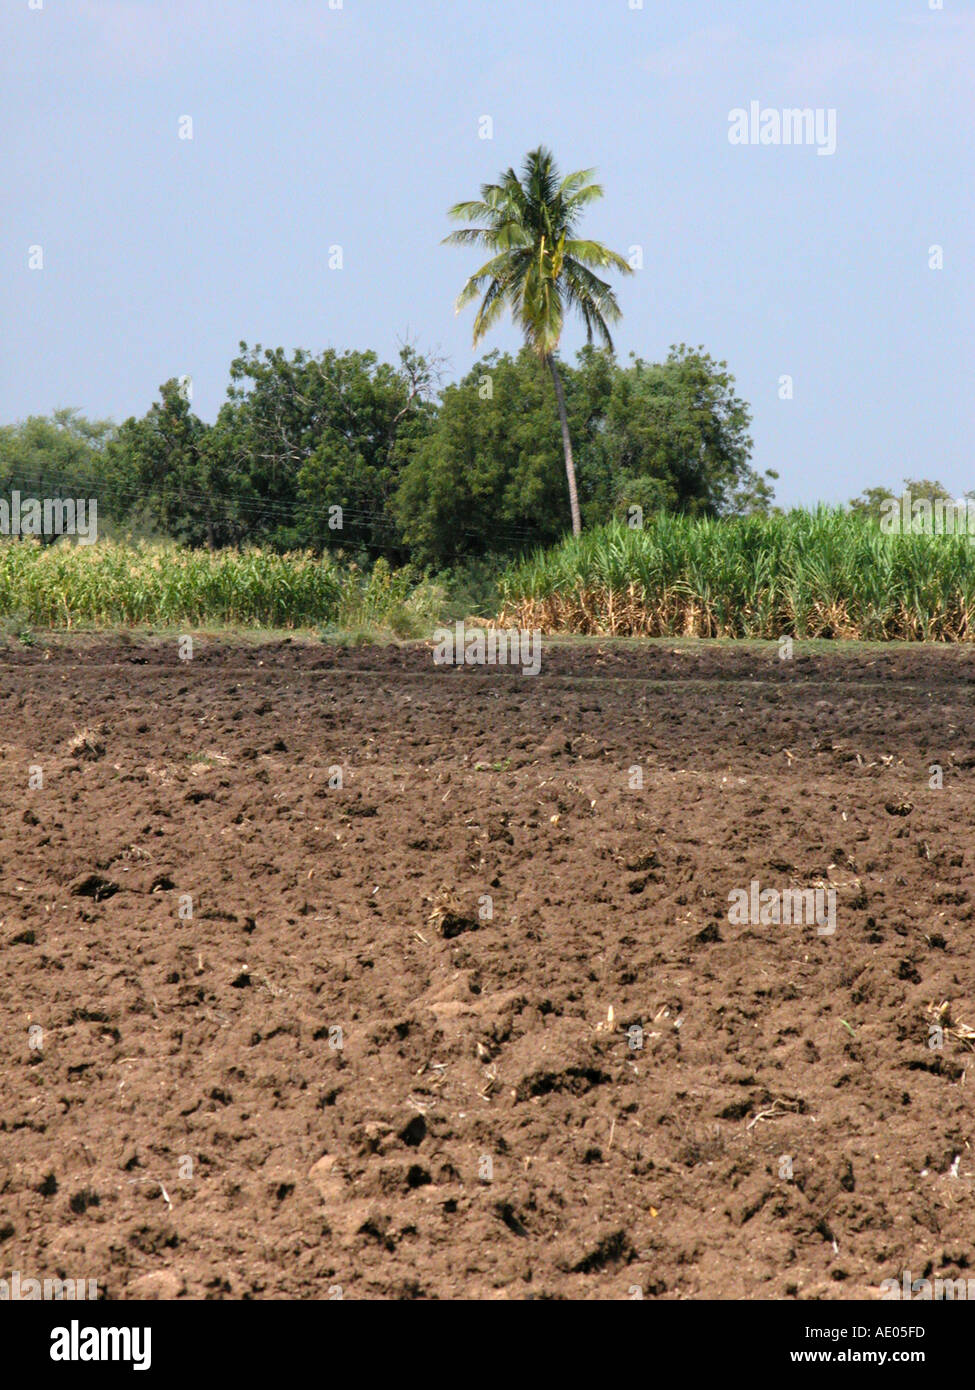 Coconut tree in Sugarcane field in India Stock Photo